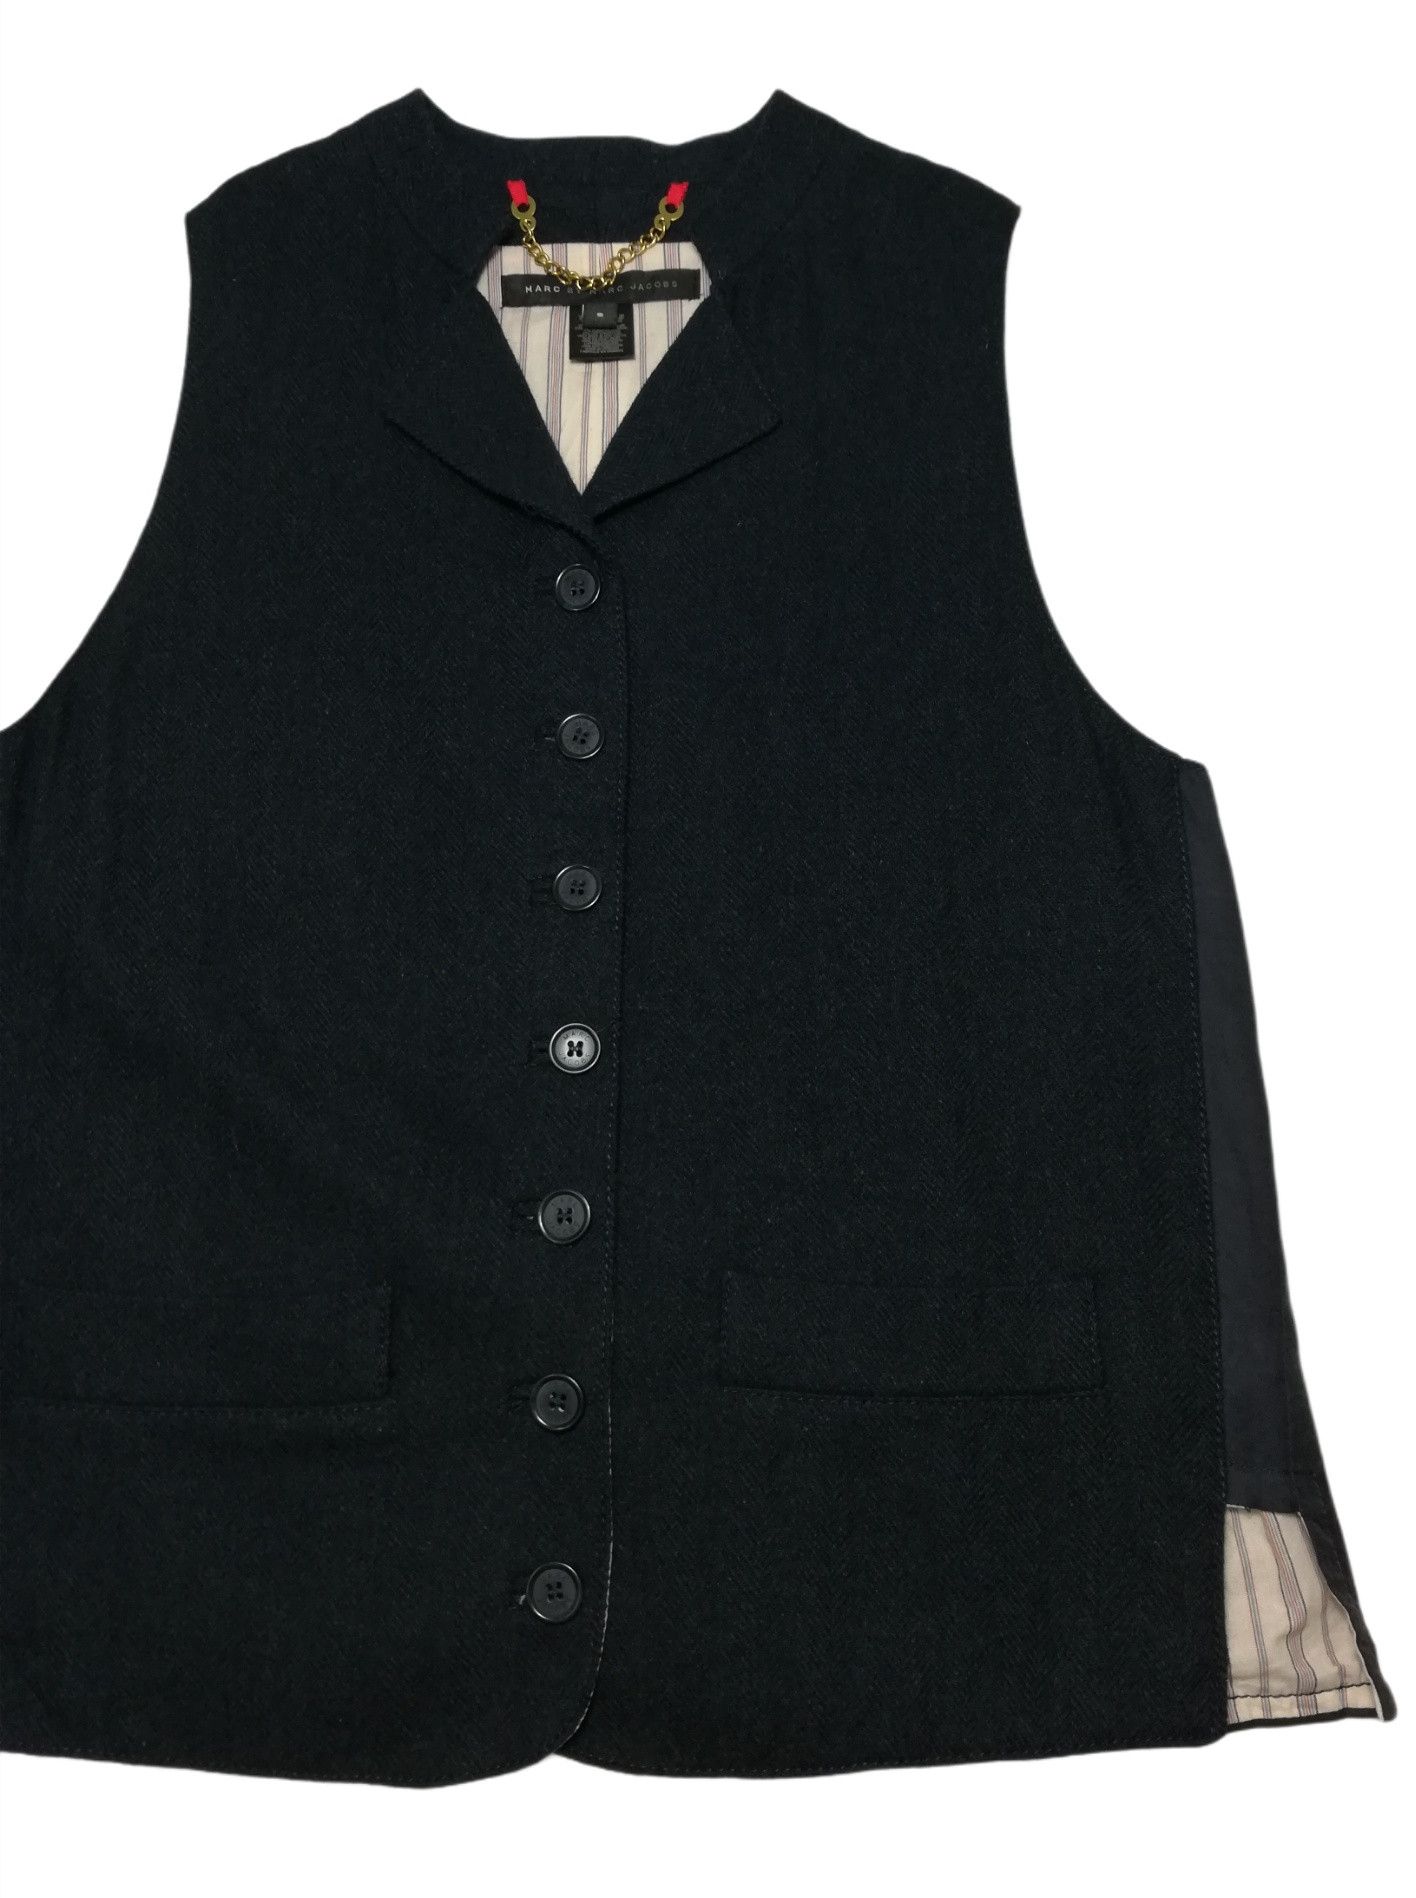 Marc Jacobs 🔥DOPE RARE Marc Jacobs Wool Herringbone Lined Stripe Vest Size US S / EU 44-46 / 1 - 4 Thumbnail